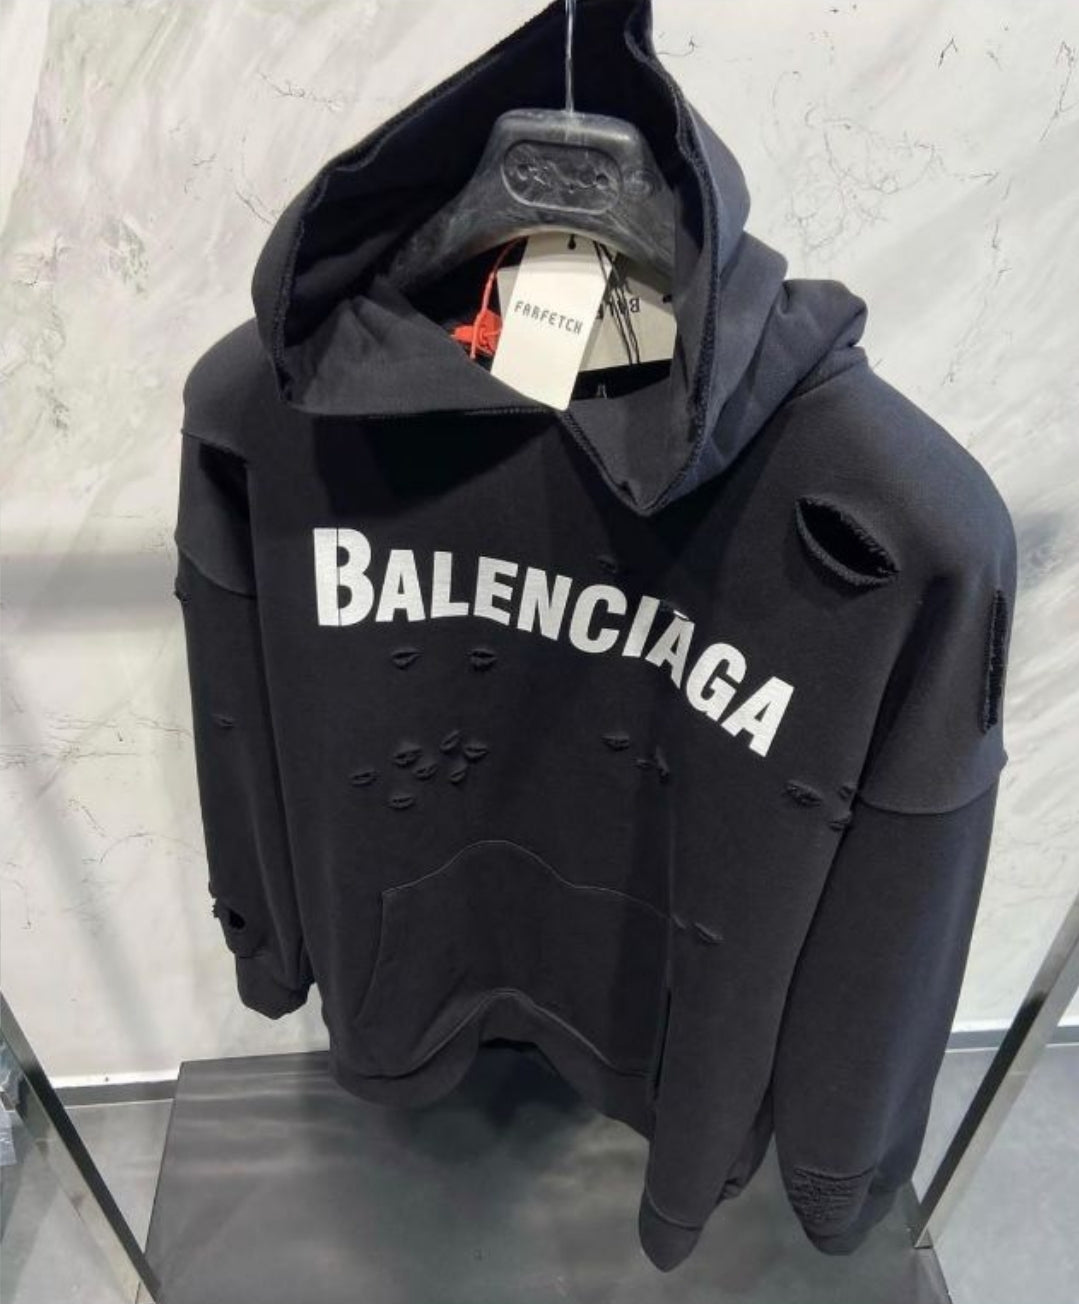 Balenciaga Distressed logo-print T-shirt - Farfetch